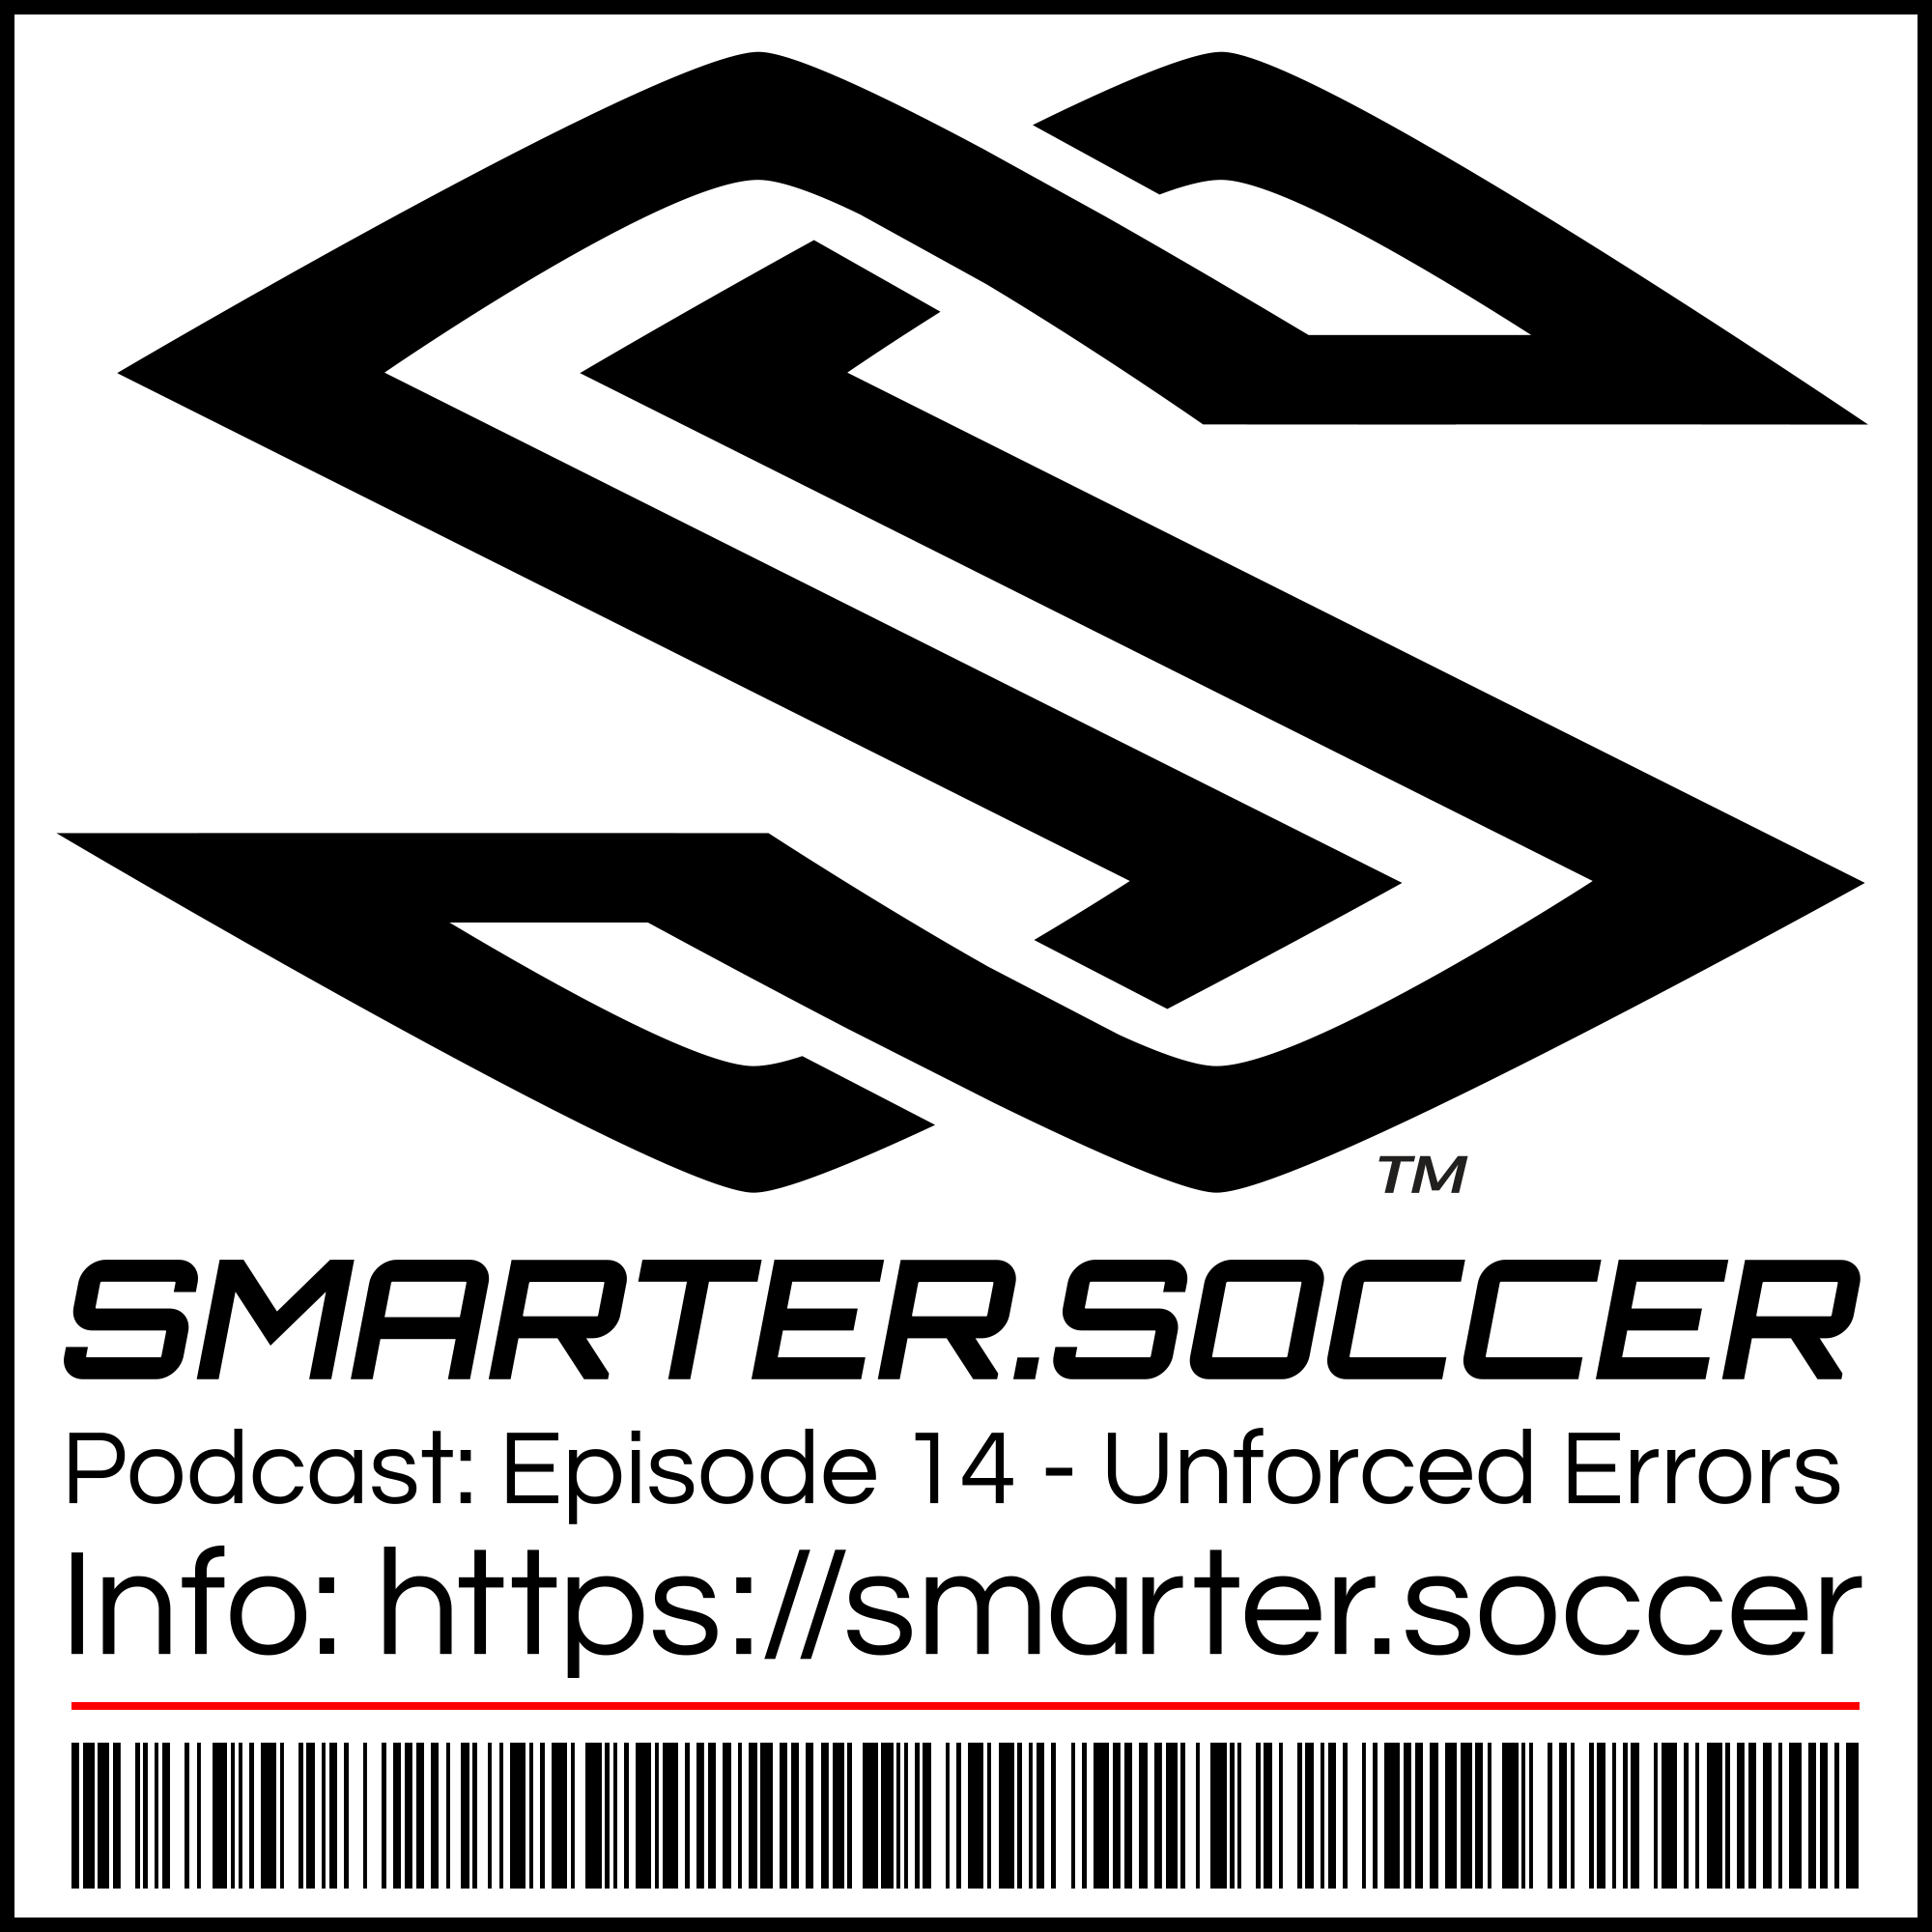 Smarter Soccer Podcast Production by Media-Star